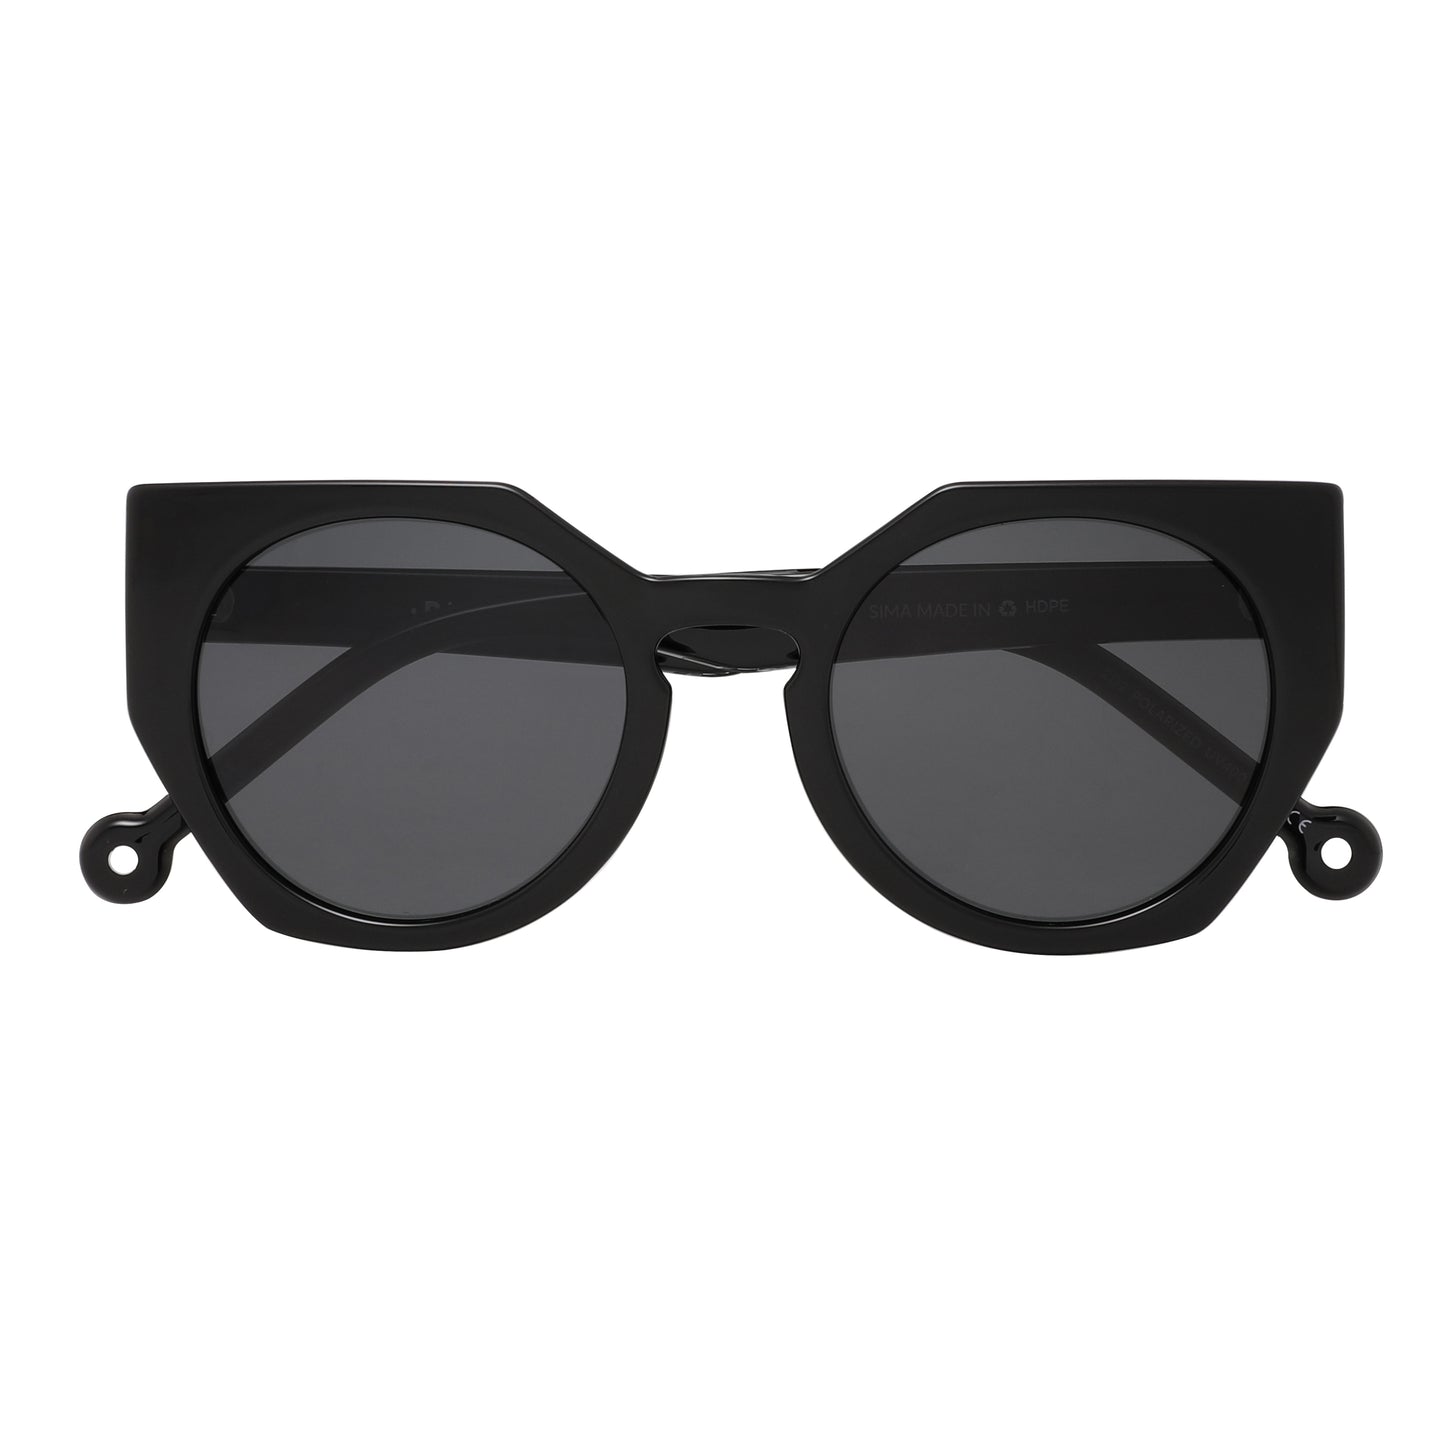 SIMA Sunglasses - Black